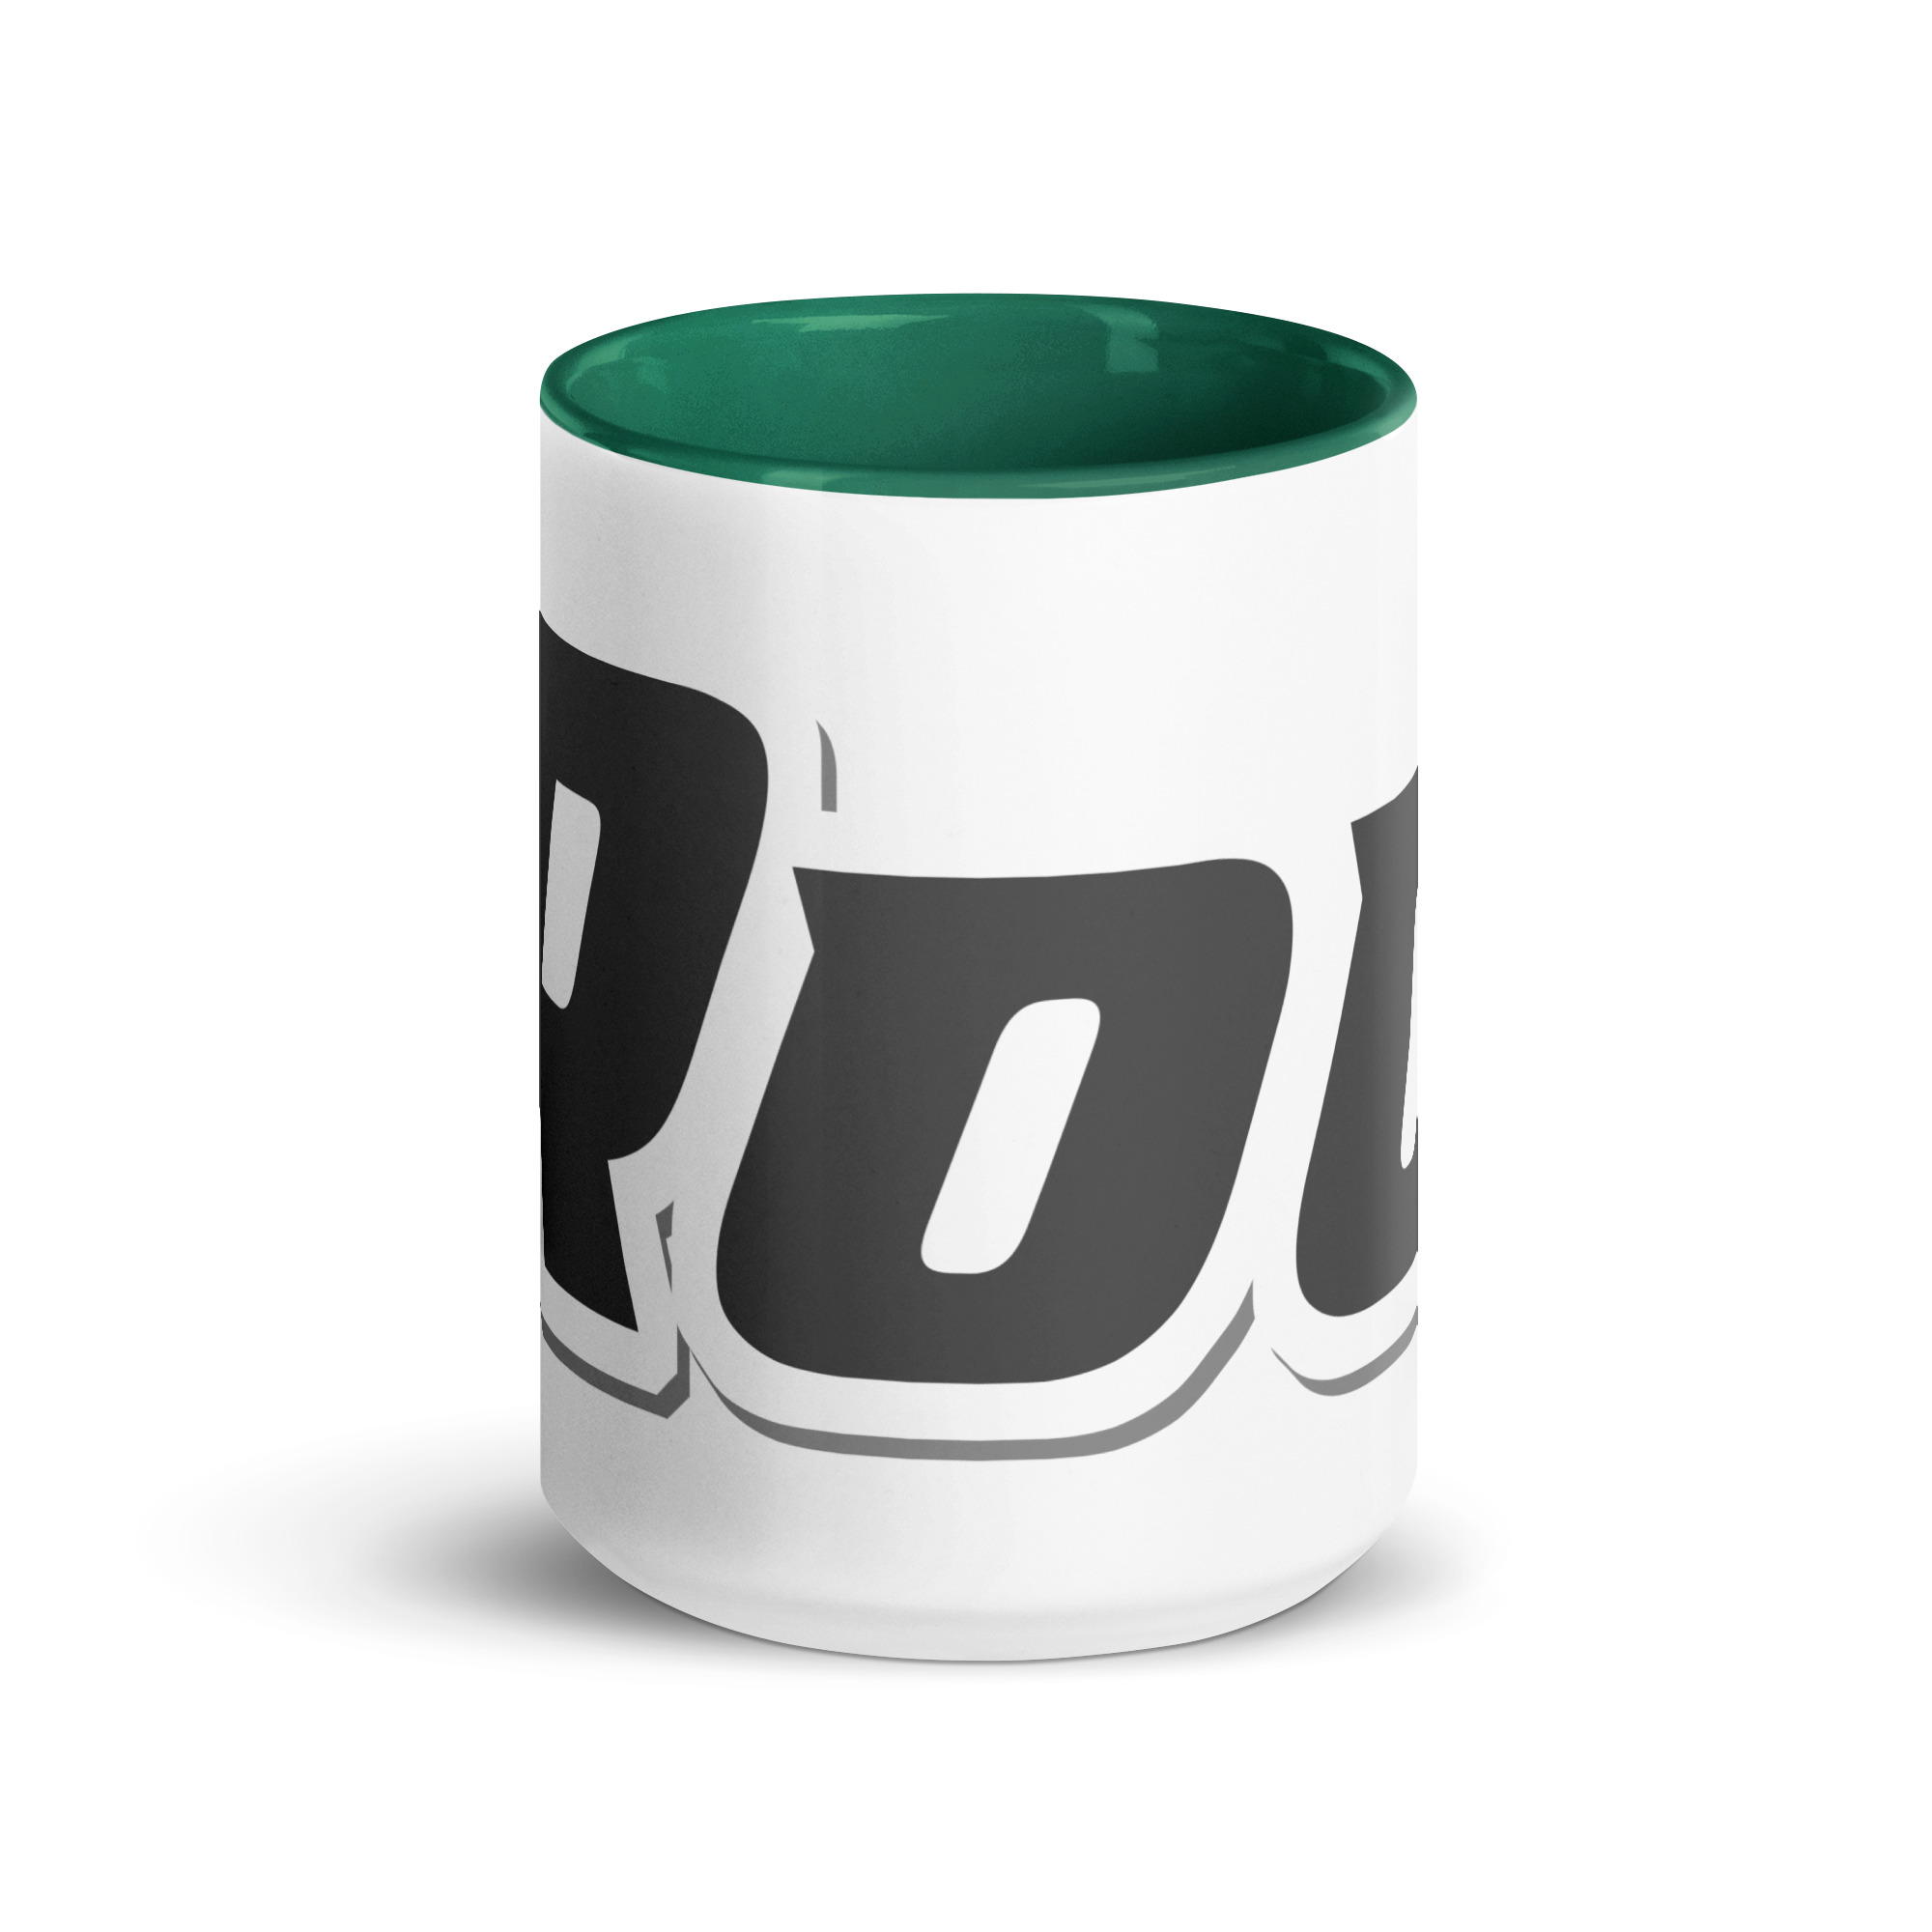 white-ceramic-mug-with-color-inside-dark-green-15-oz-front-6525b50608e21.jpg